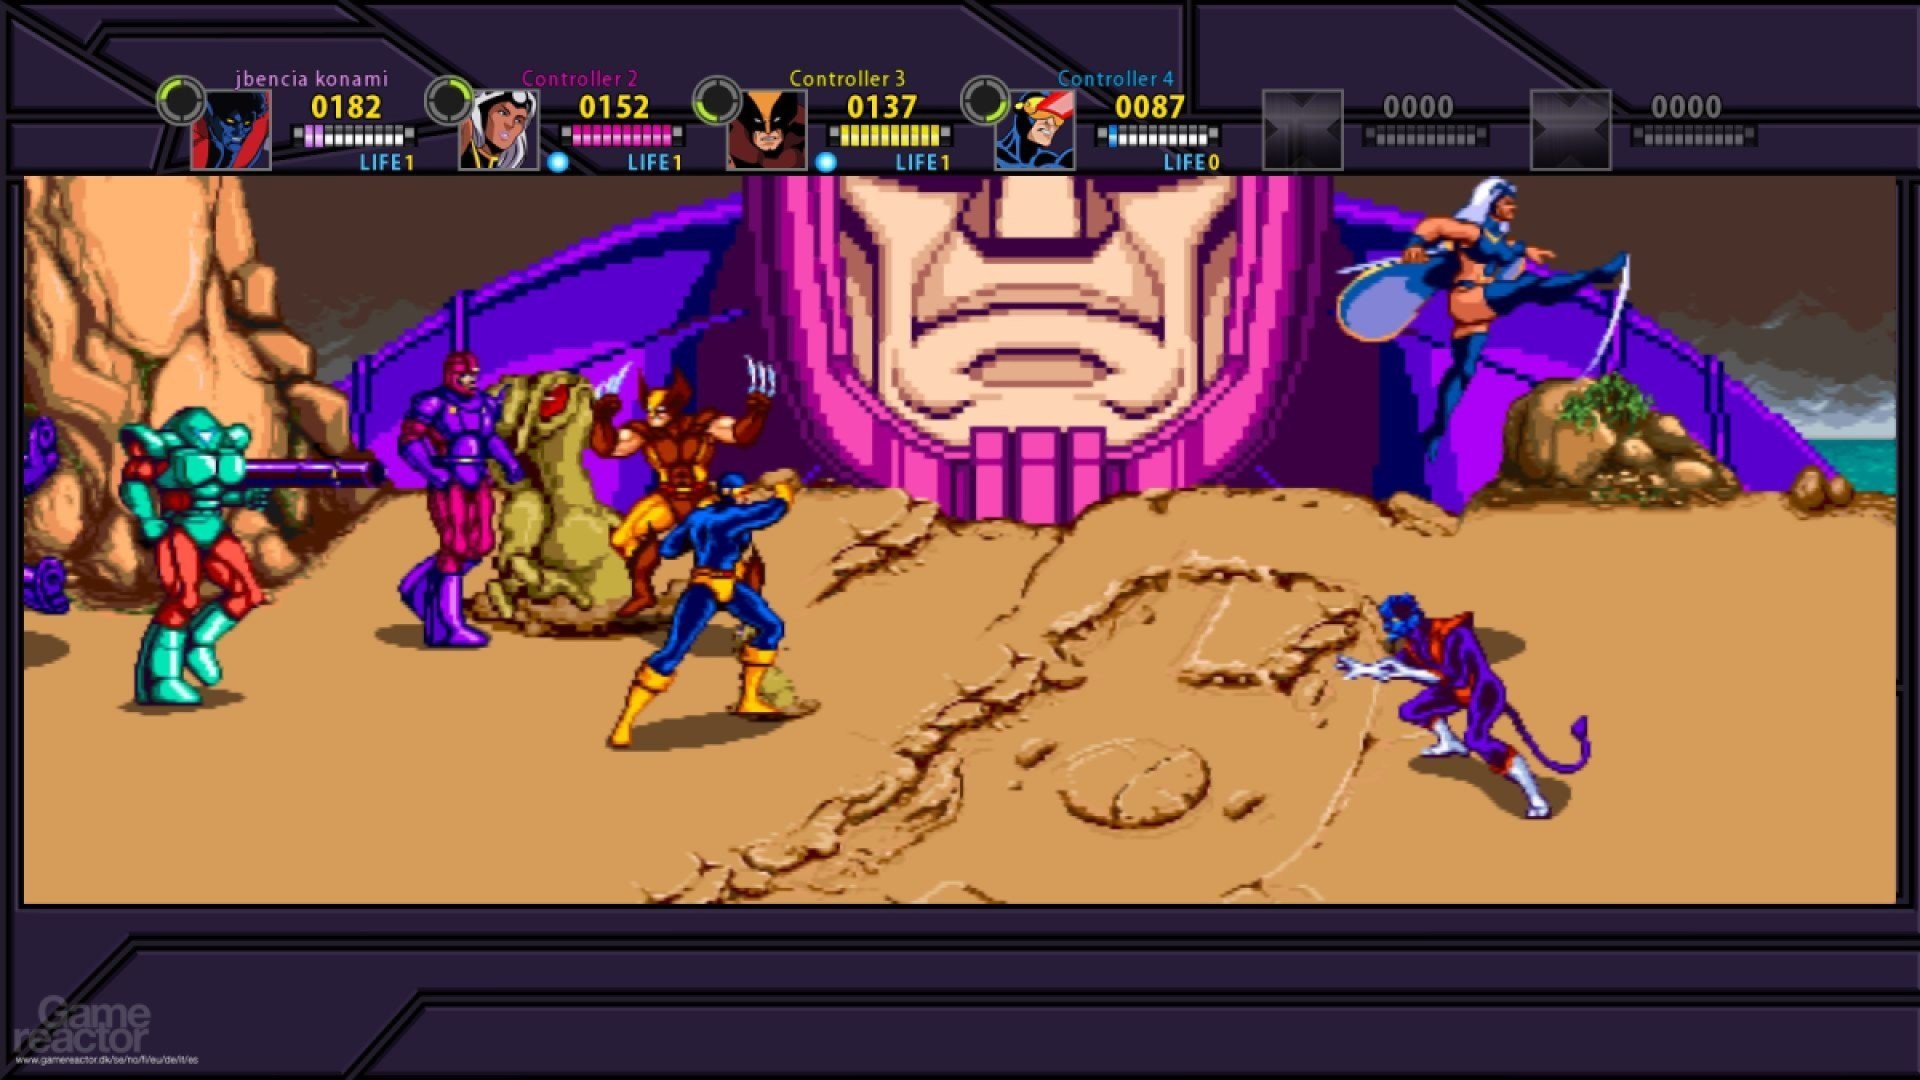 Animated X-Men fight in the desert in the game "X-Men"